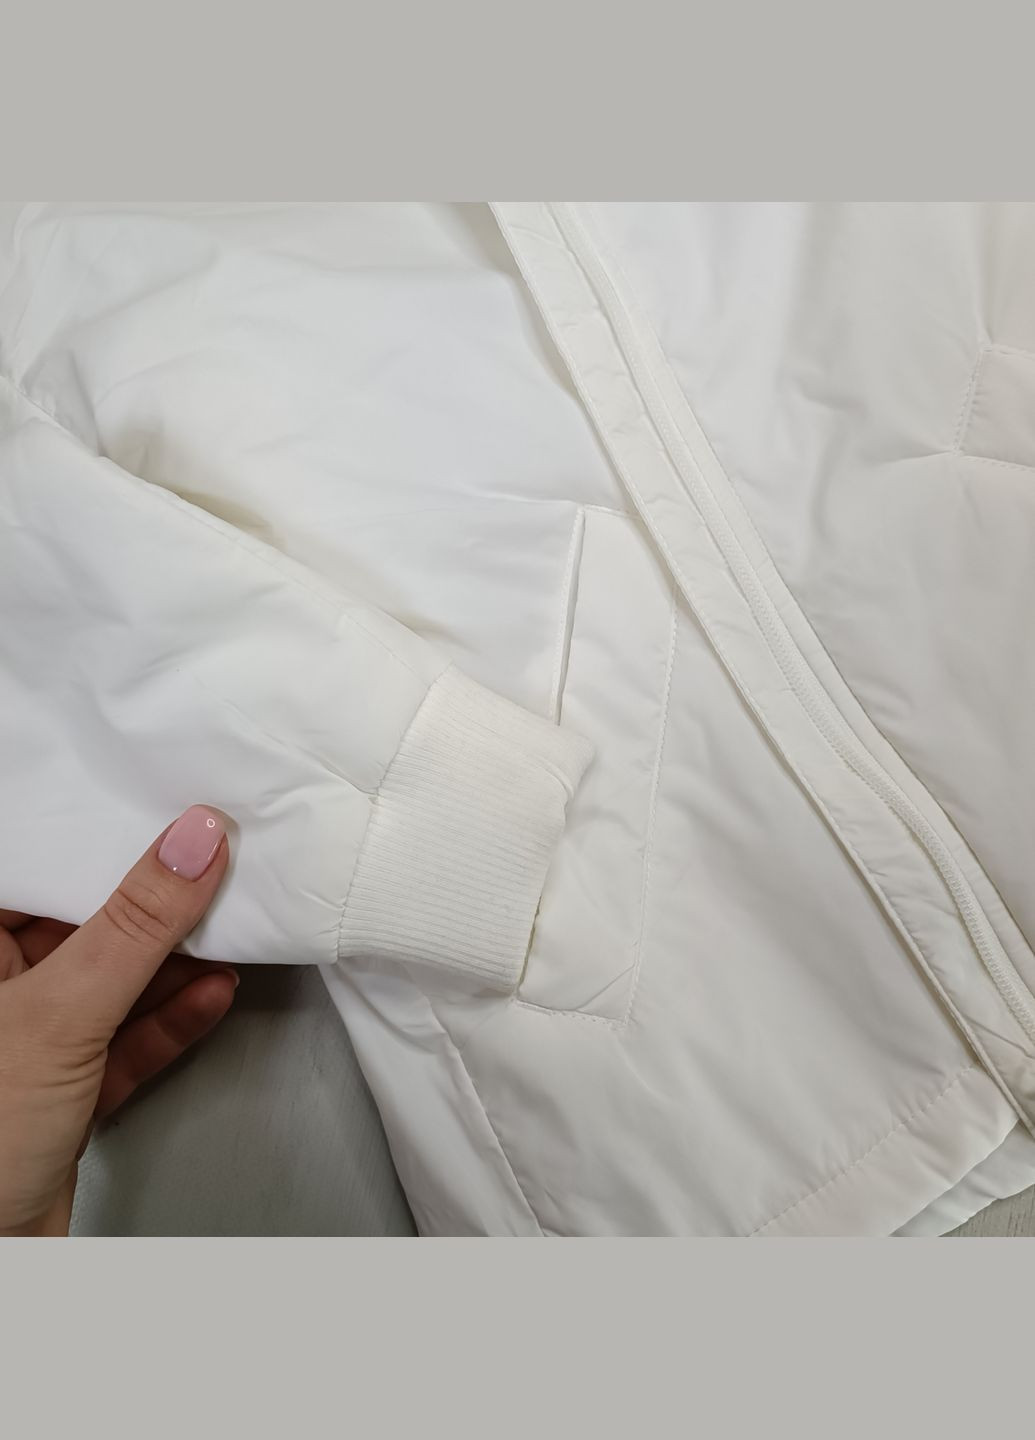 Белая демисезонная куртка-бомбер для девочки Pepperts